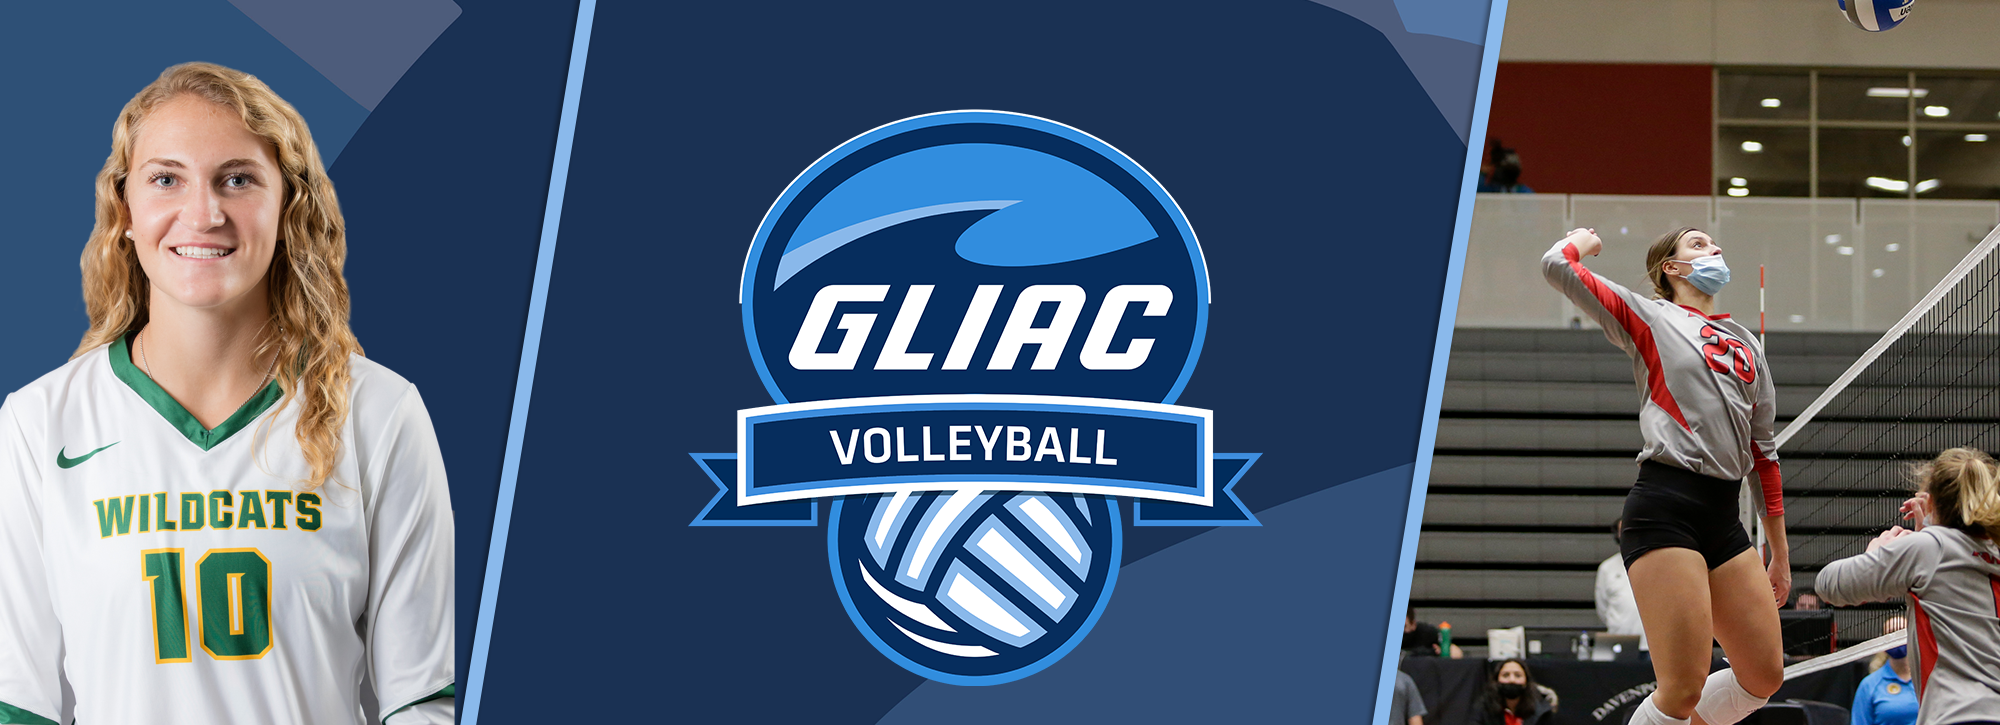 NMU's Smith, DU's Webb Claim GLIAC Volleyball Players of the Week